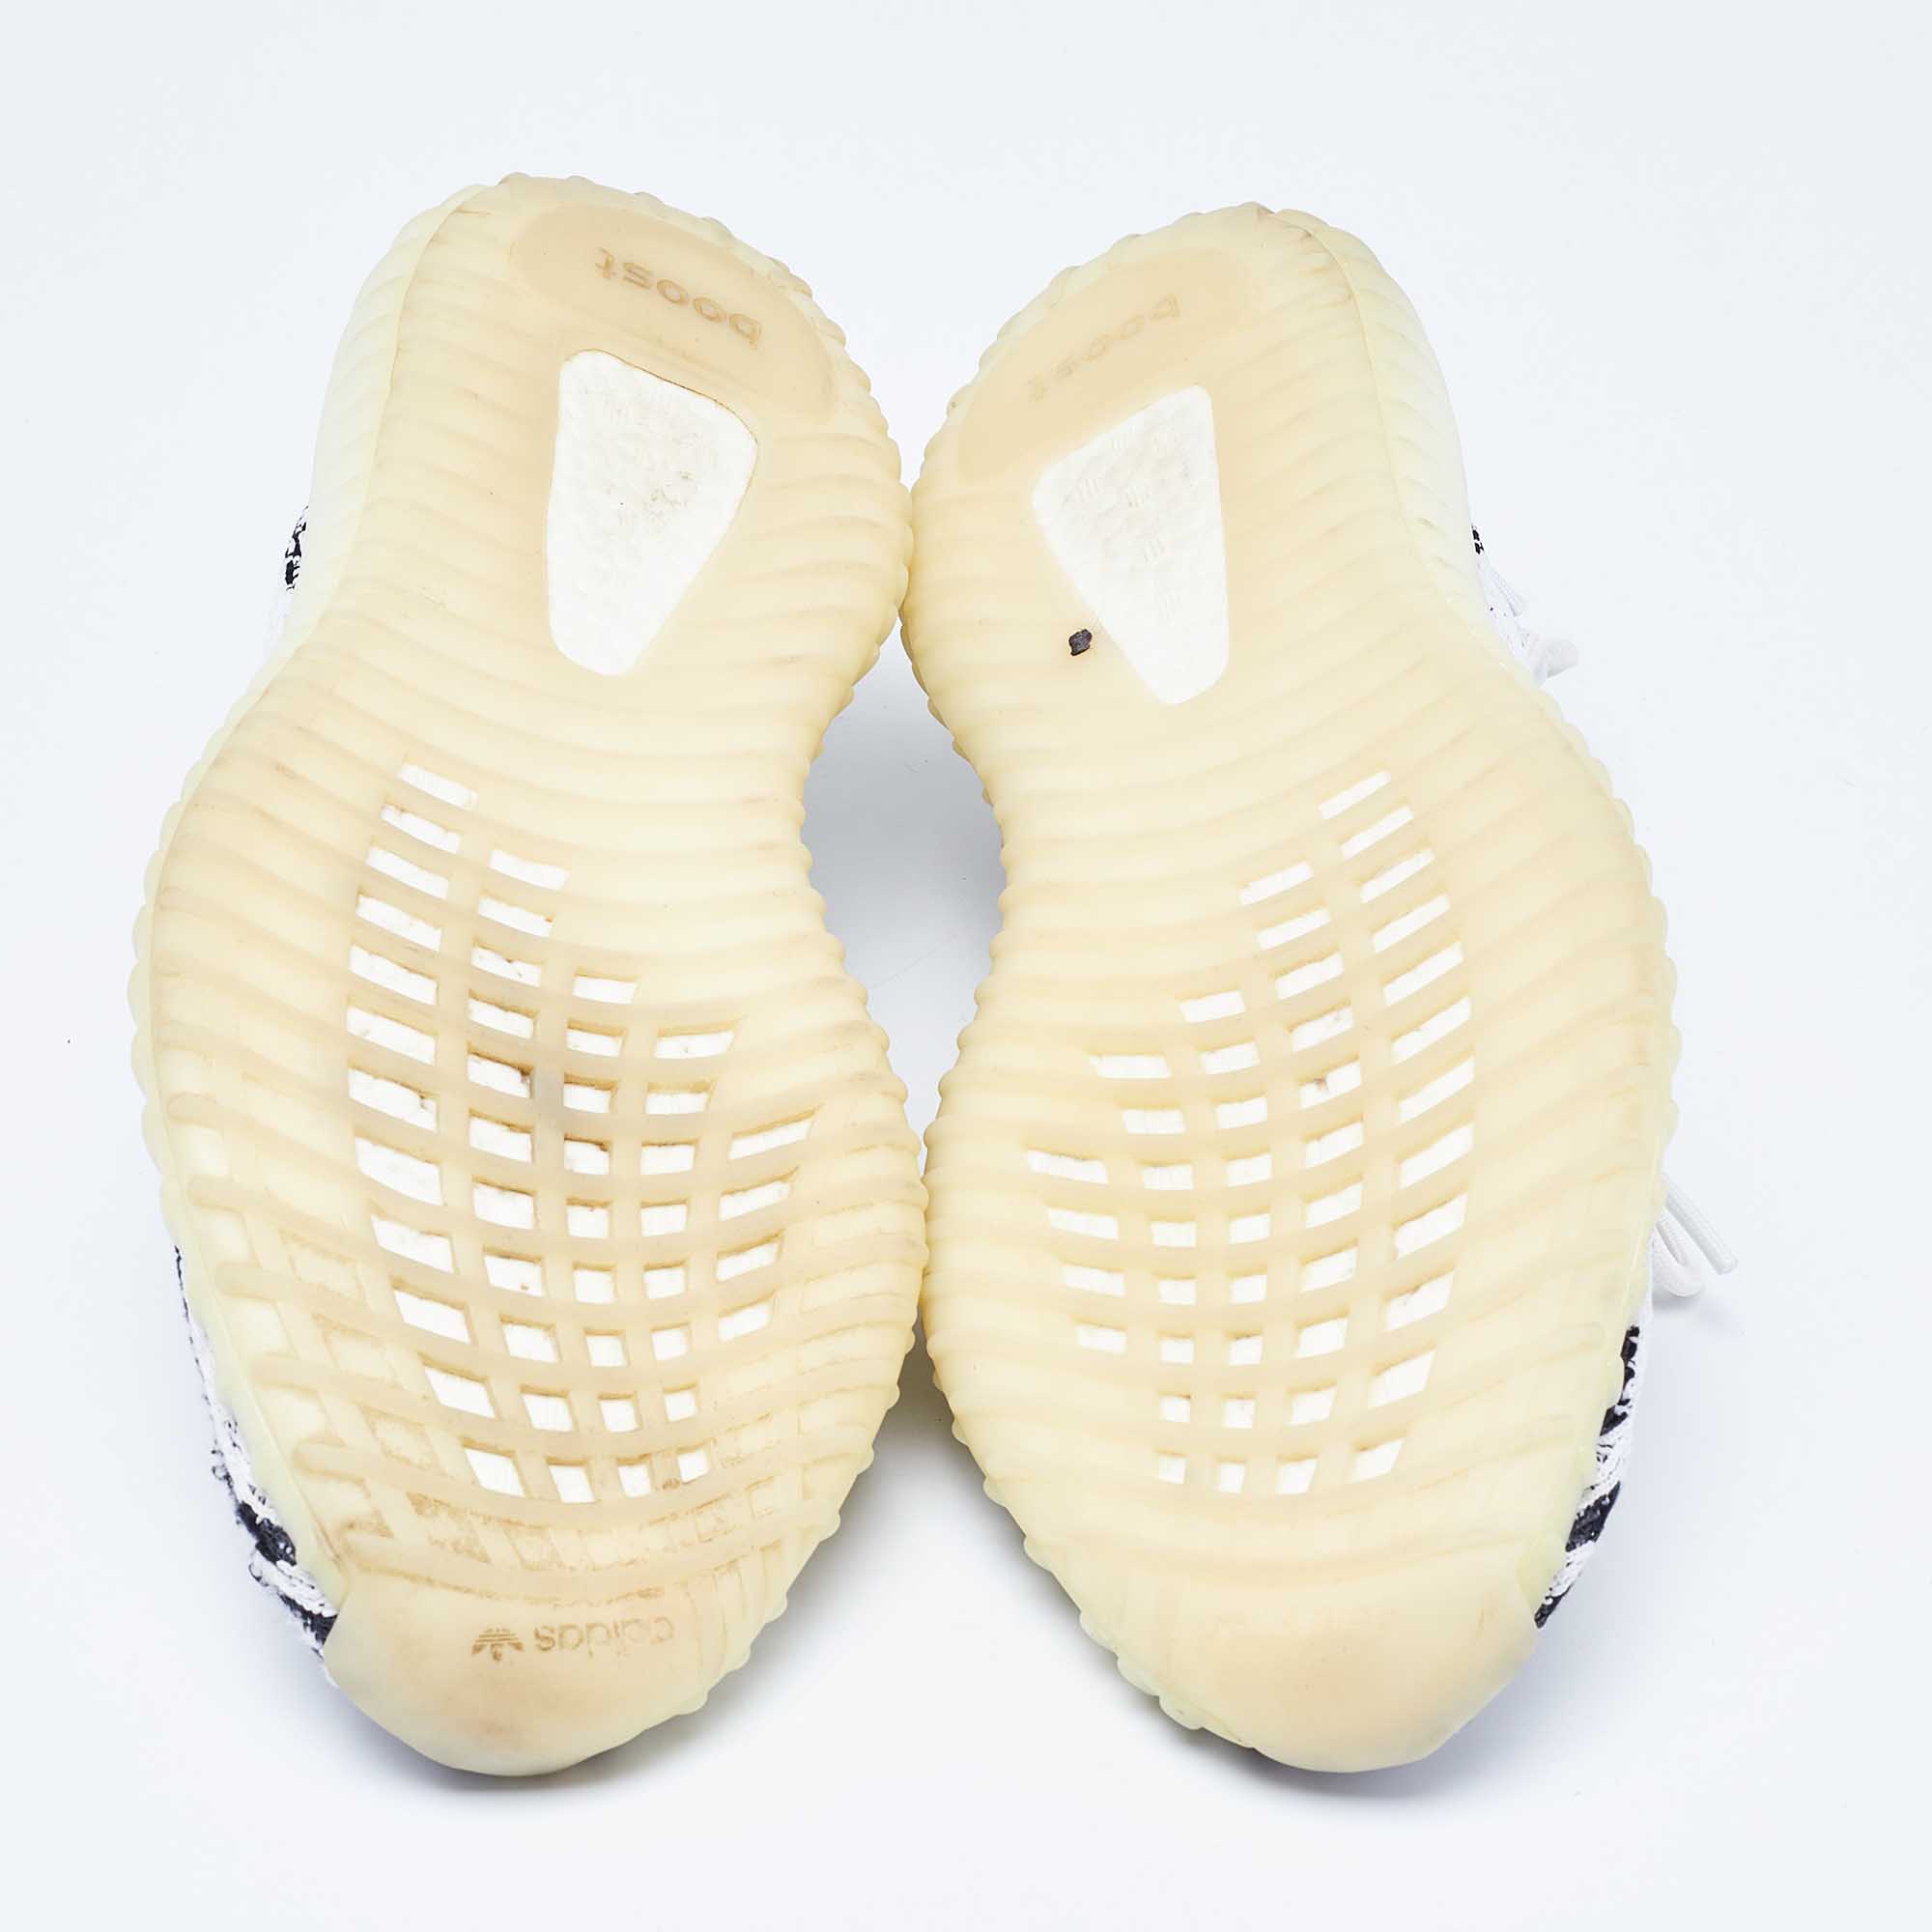 Yeezy X Adidas White/Black Knit Fabric Boost 350 V2 Zebra Sneakers Size 46 2/3